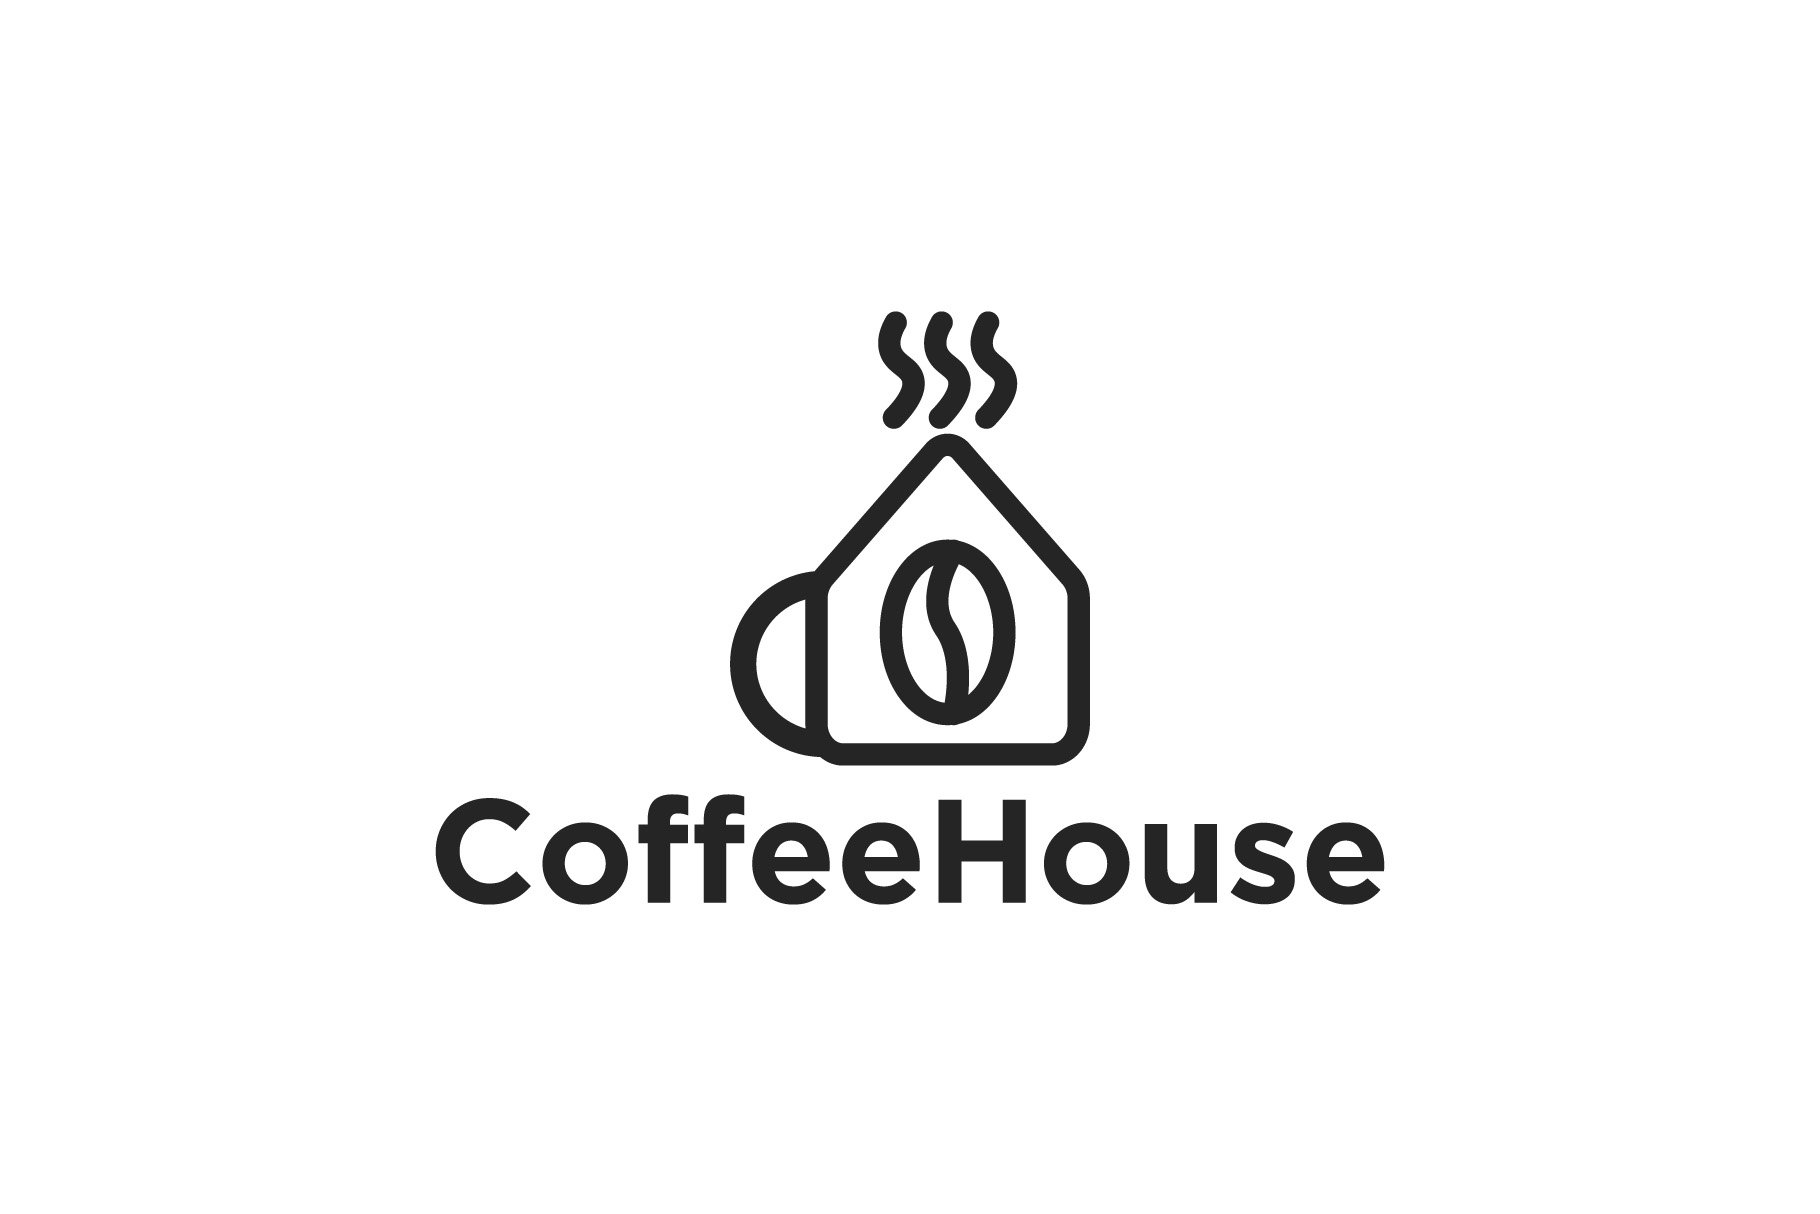 Coffee house logo in a black.